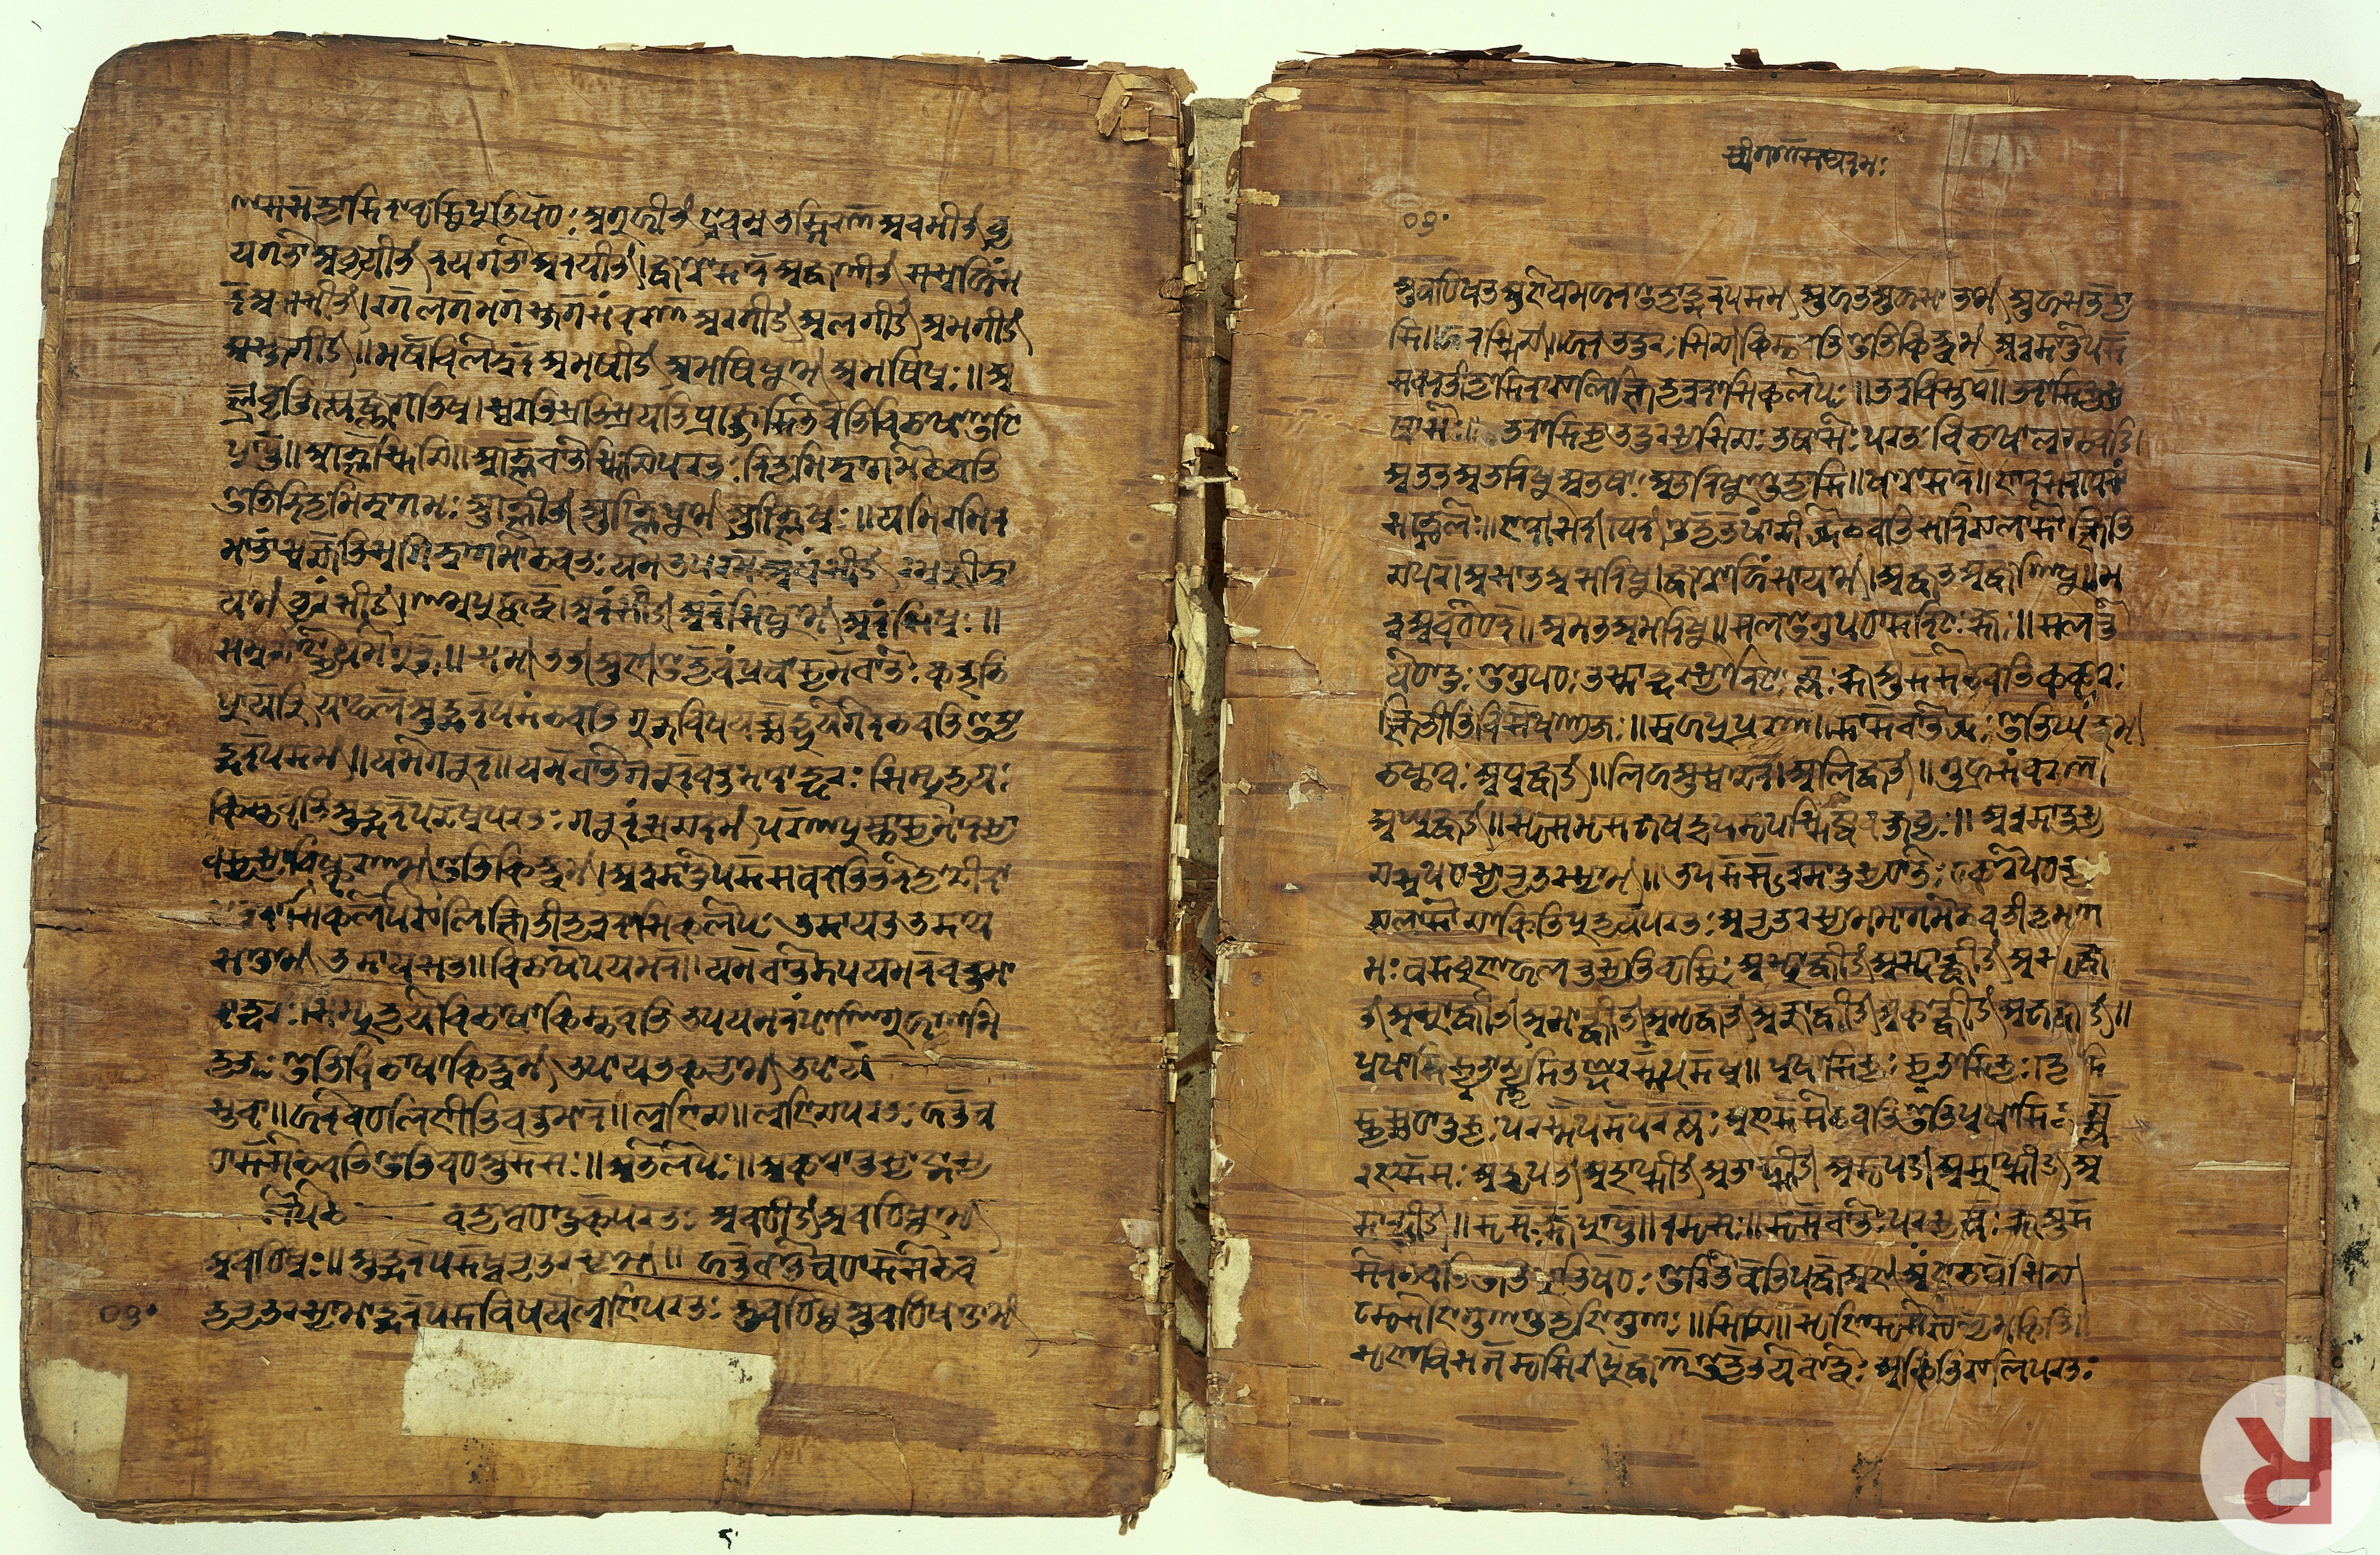 A 17th-century birch bark manuscript of Pāṇini's grammar treatise from Kashmir